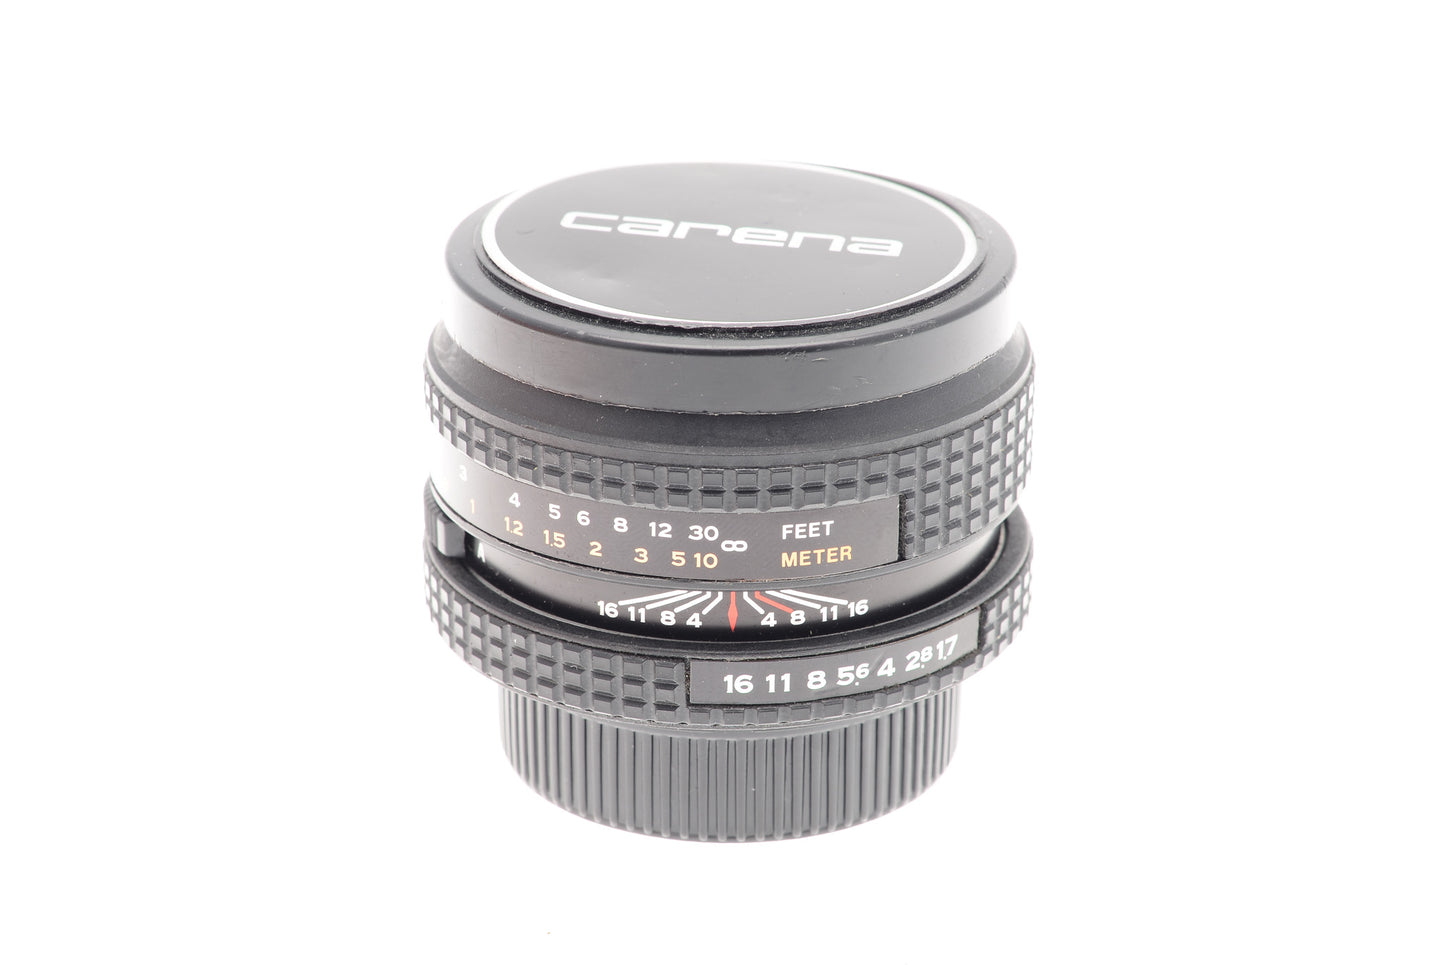 Carenar 50mm f1.7 - Lens